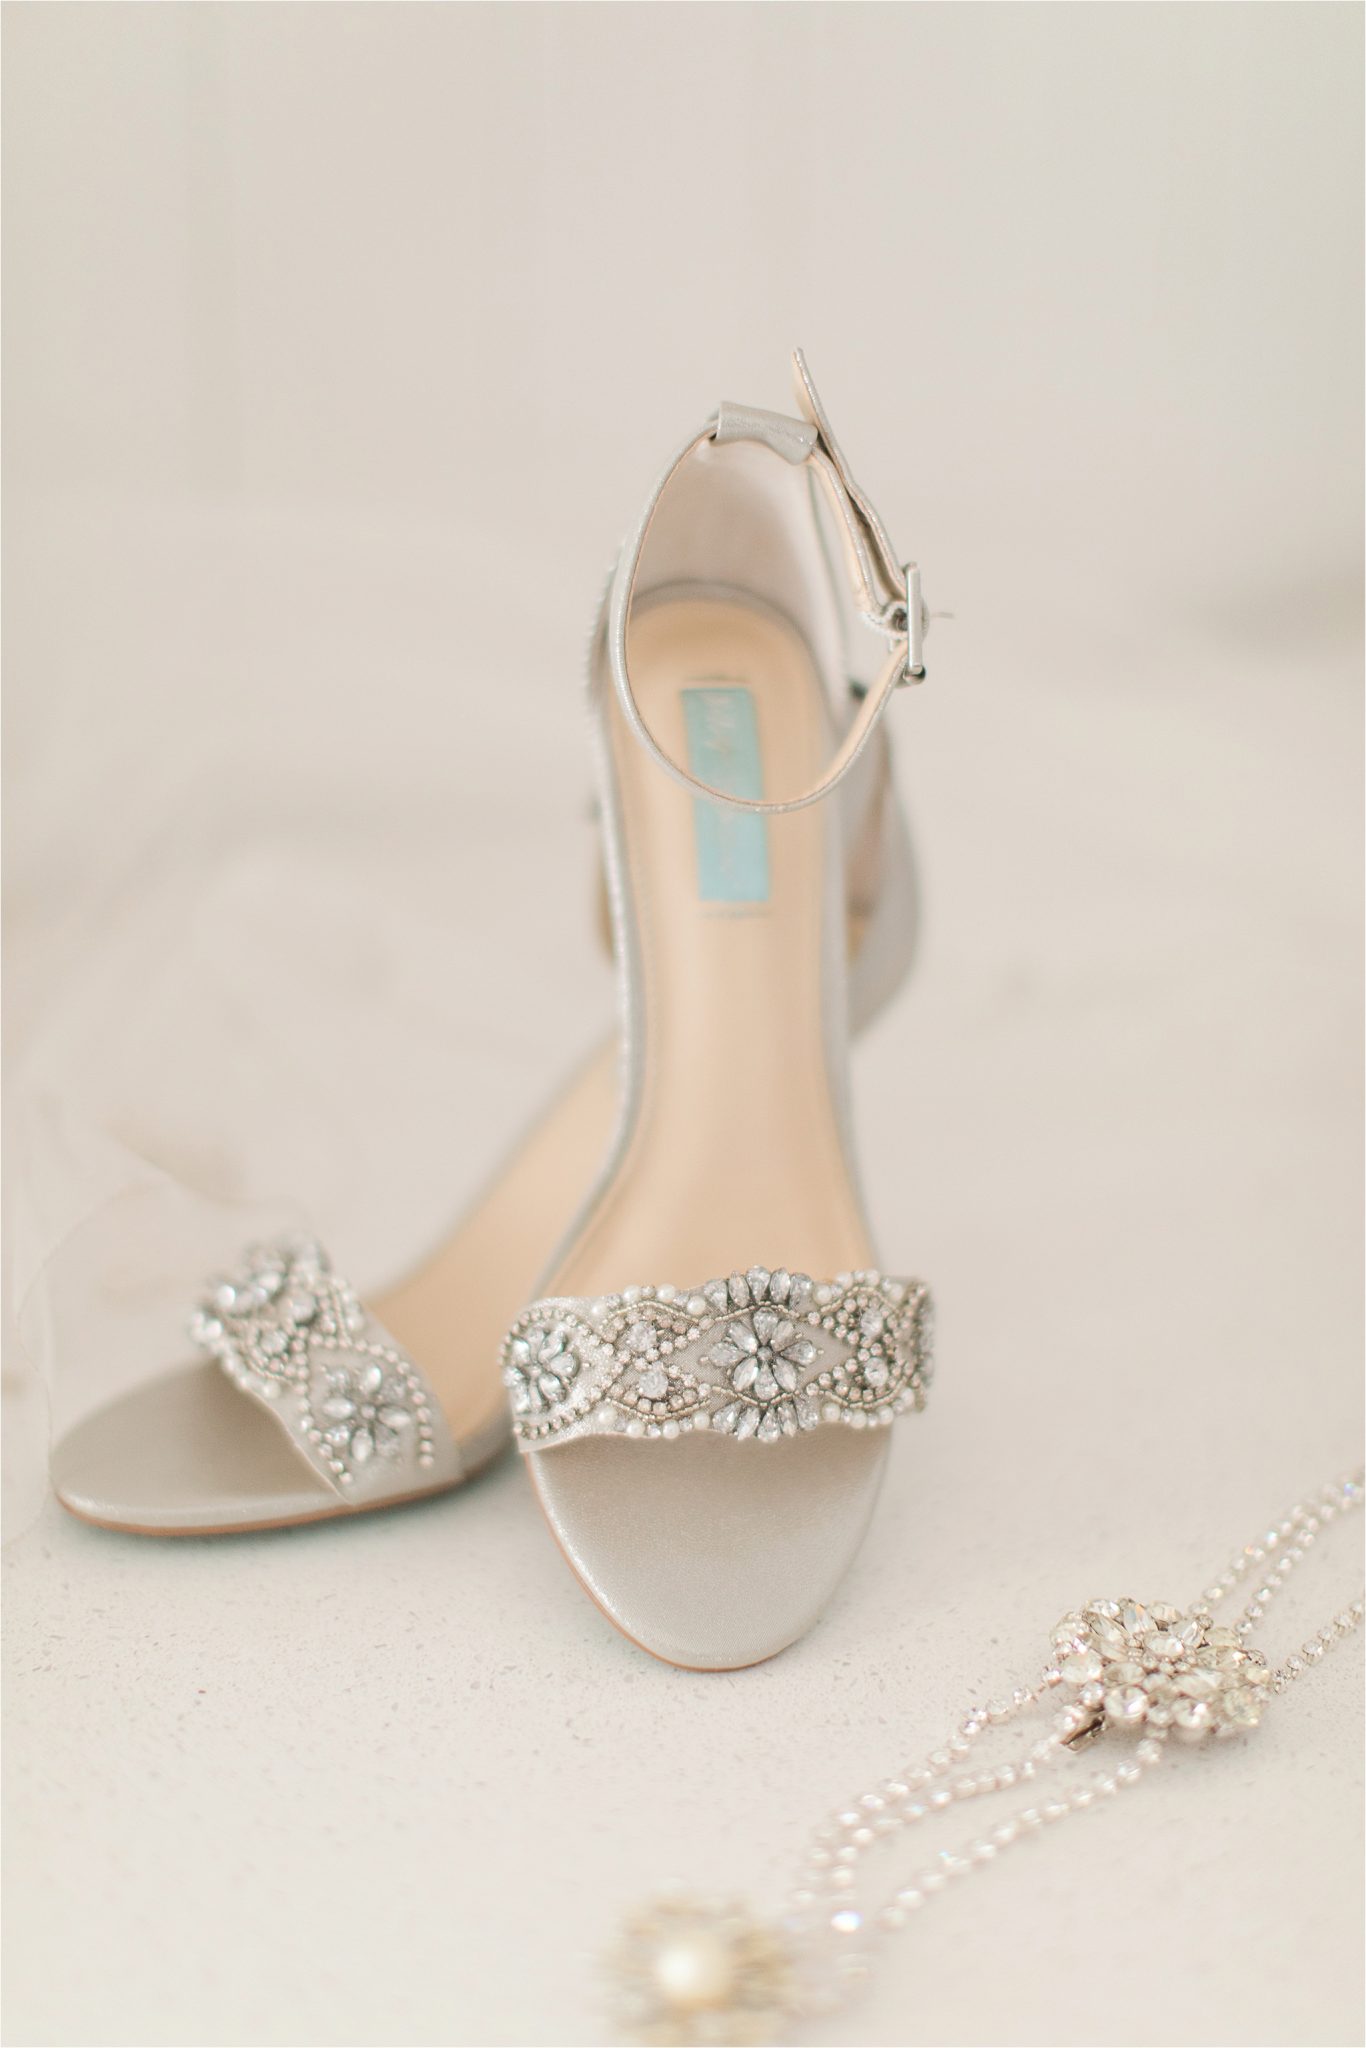 Alabama Wedding Photographer-Little Point Clear Winter Wedding-Meri Beth + Andrew-Wedding Shoes-Wedding Details